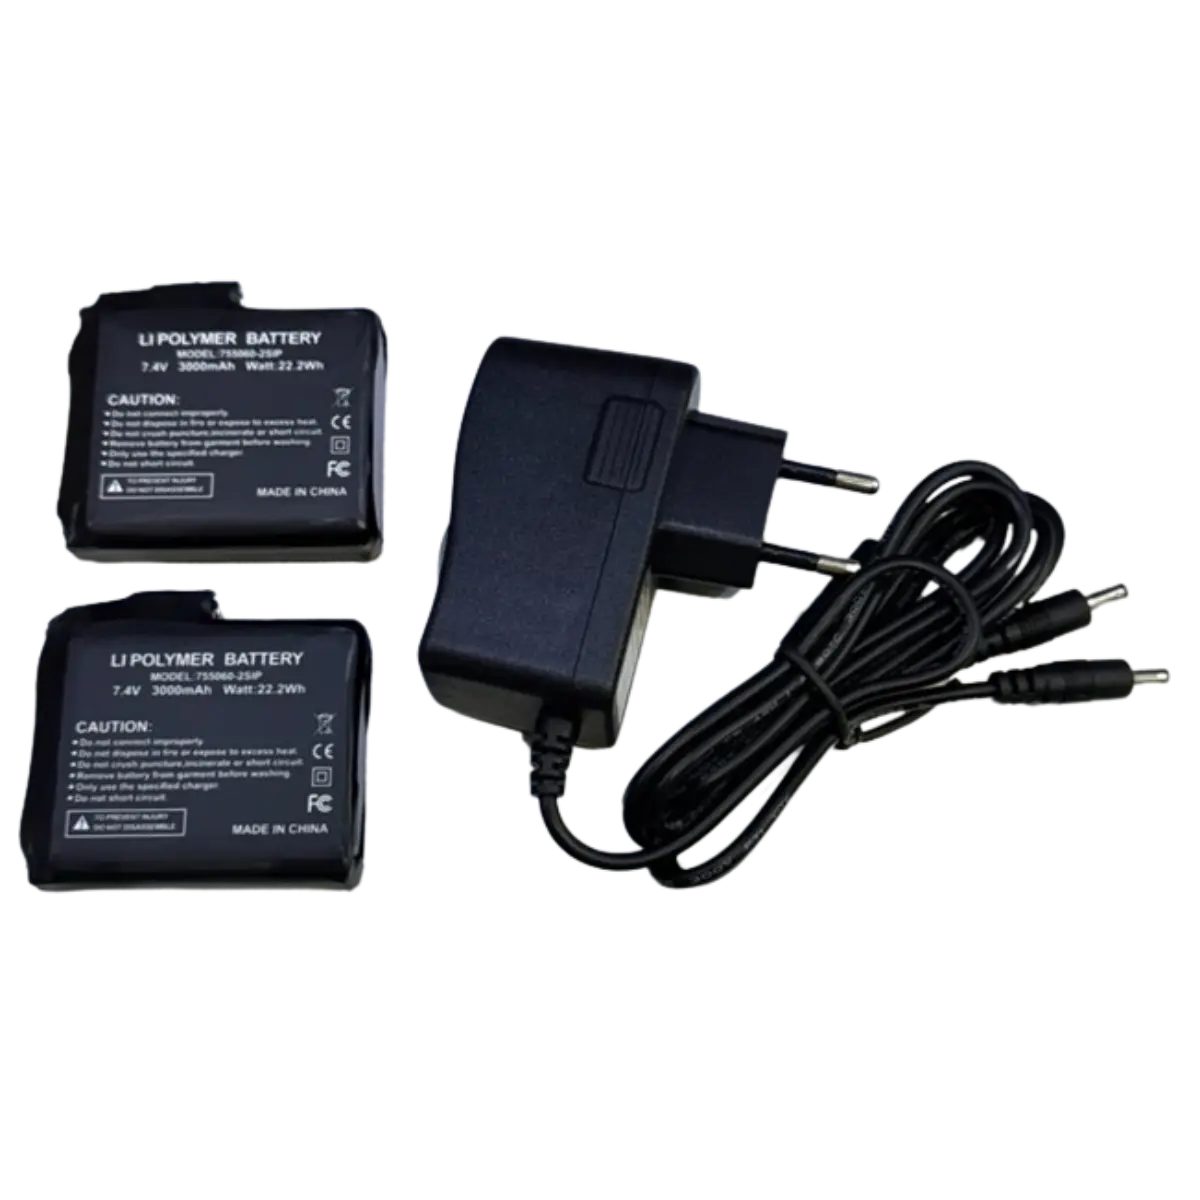 2 Batteries + chargeur gants chauffants -  Li-Po - 7.4V - 3000mAh